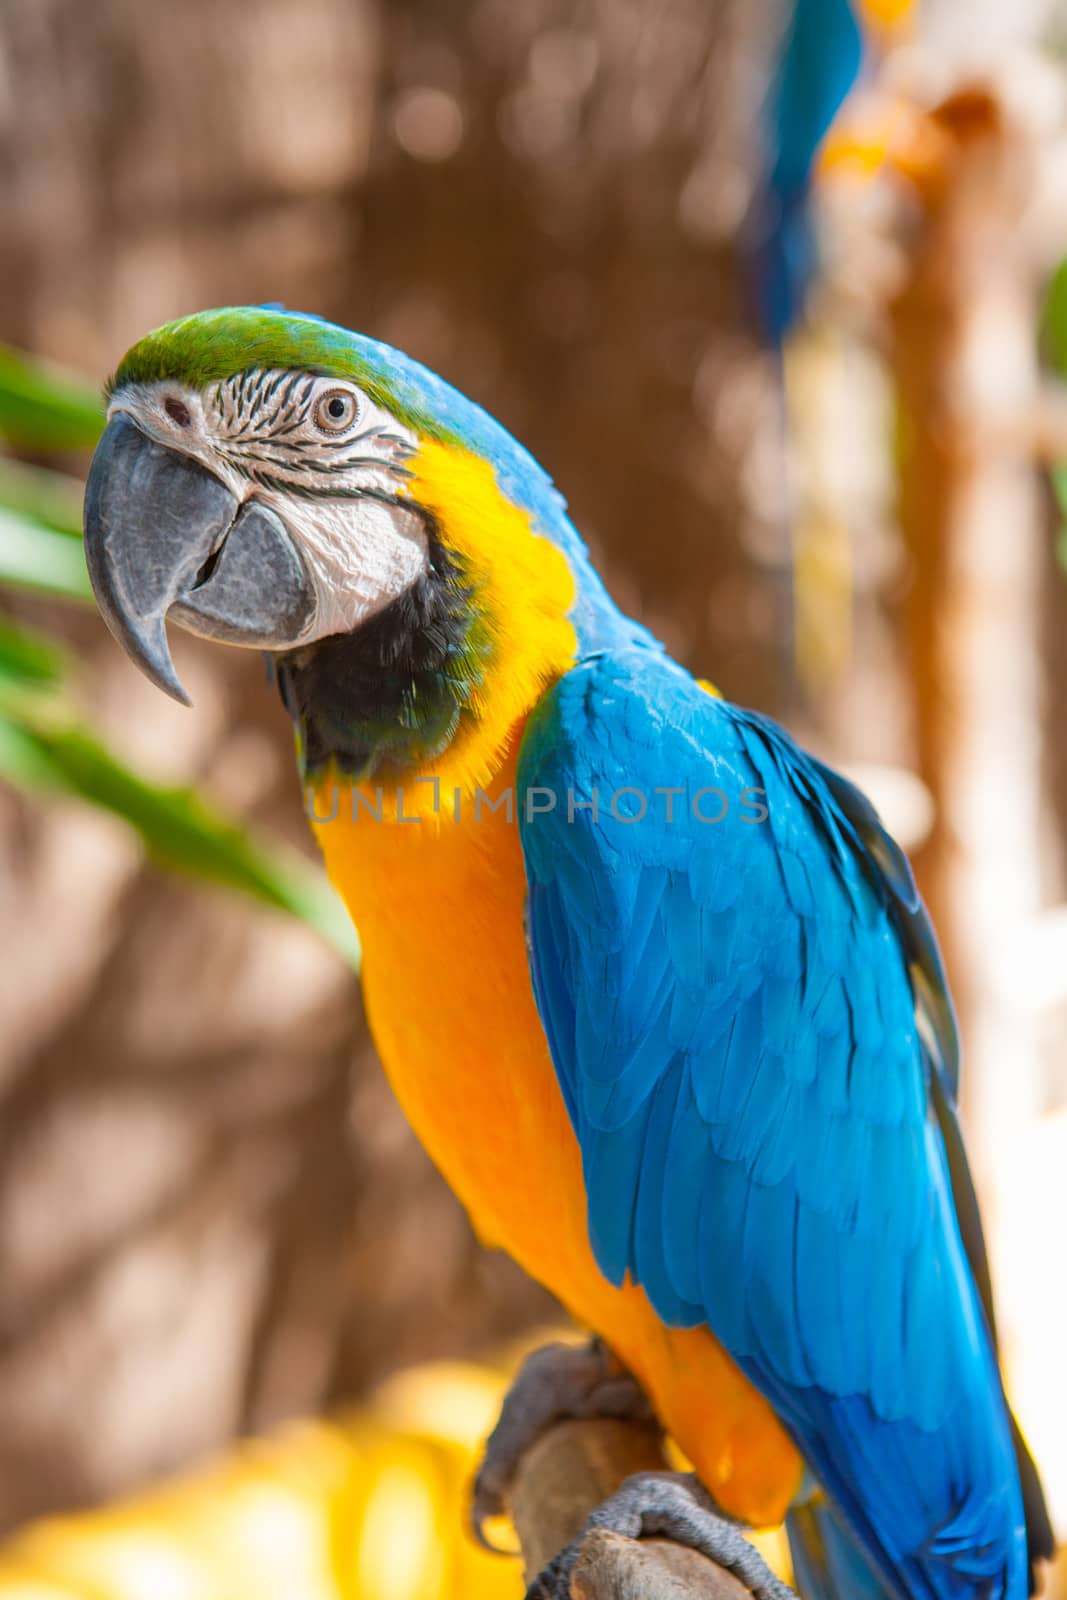 Blue Parrot portrait with yellow neck by lunamarina